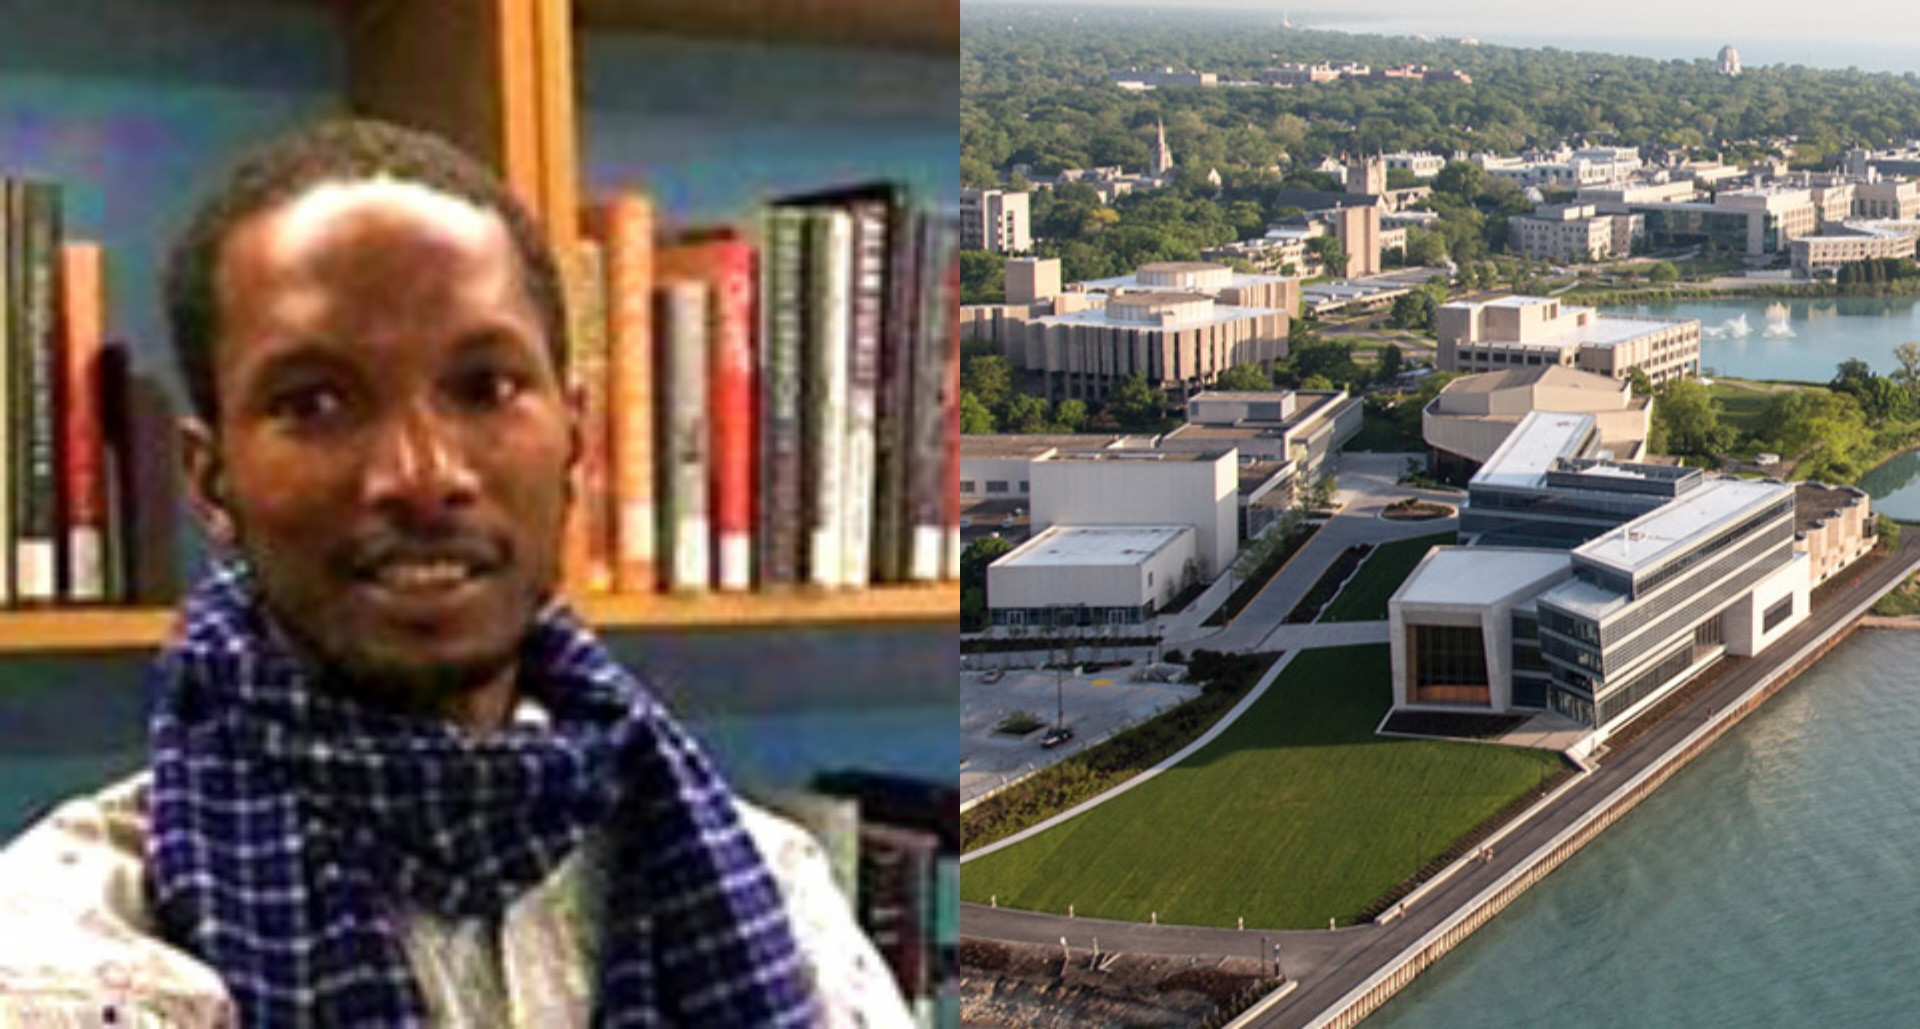 Africanist’s Chernoh Bah Bags PhD From Northwestern University